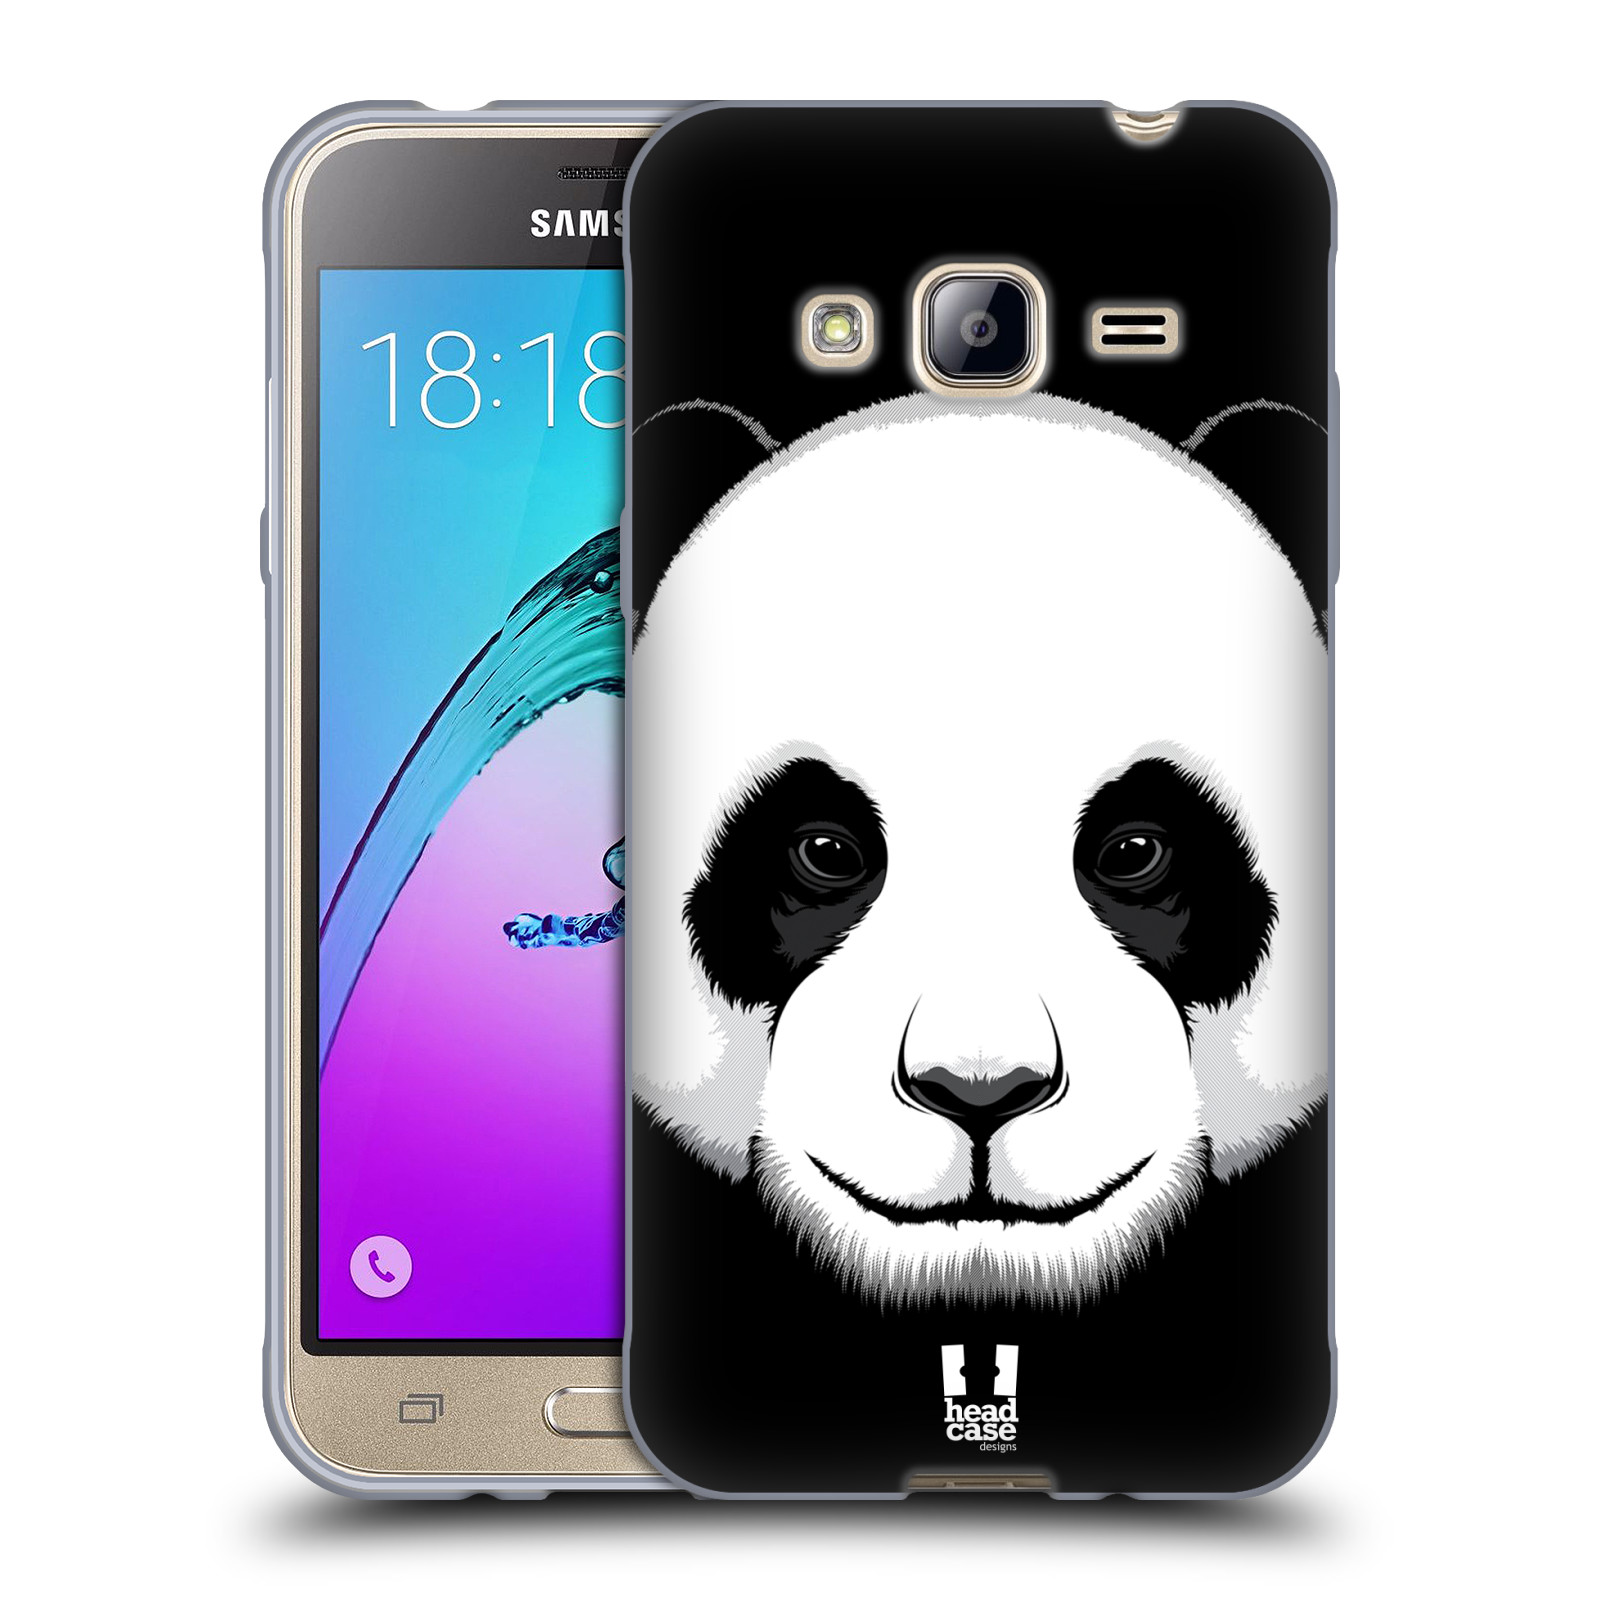 HEAD CASE silikonový obal na mobil Samsung Galaxy J3, J3 2016 vzor Zvíře kreslená tvář panda